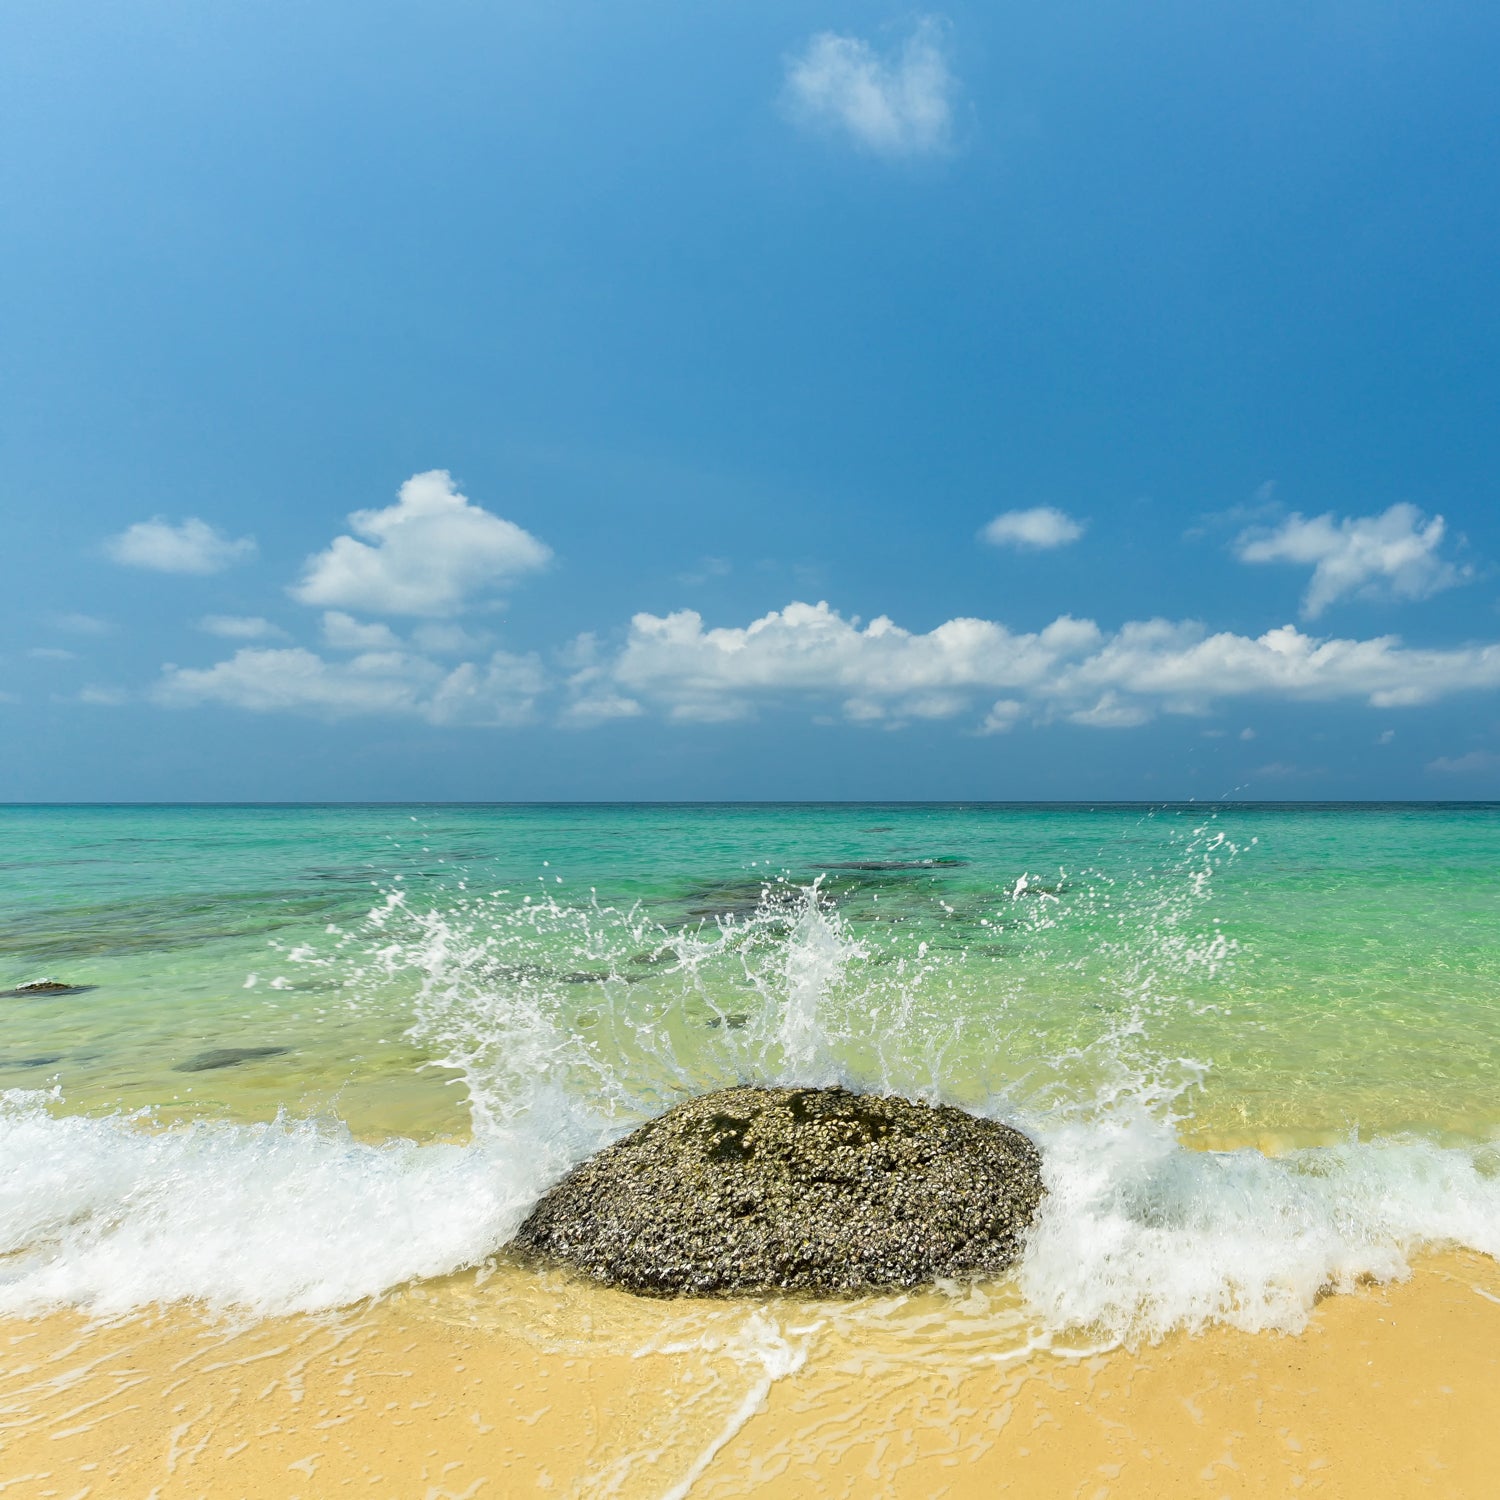 A tropical beach - inspiration for our "Stress-Free" wax melt bar